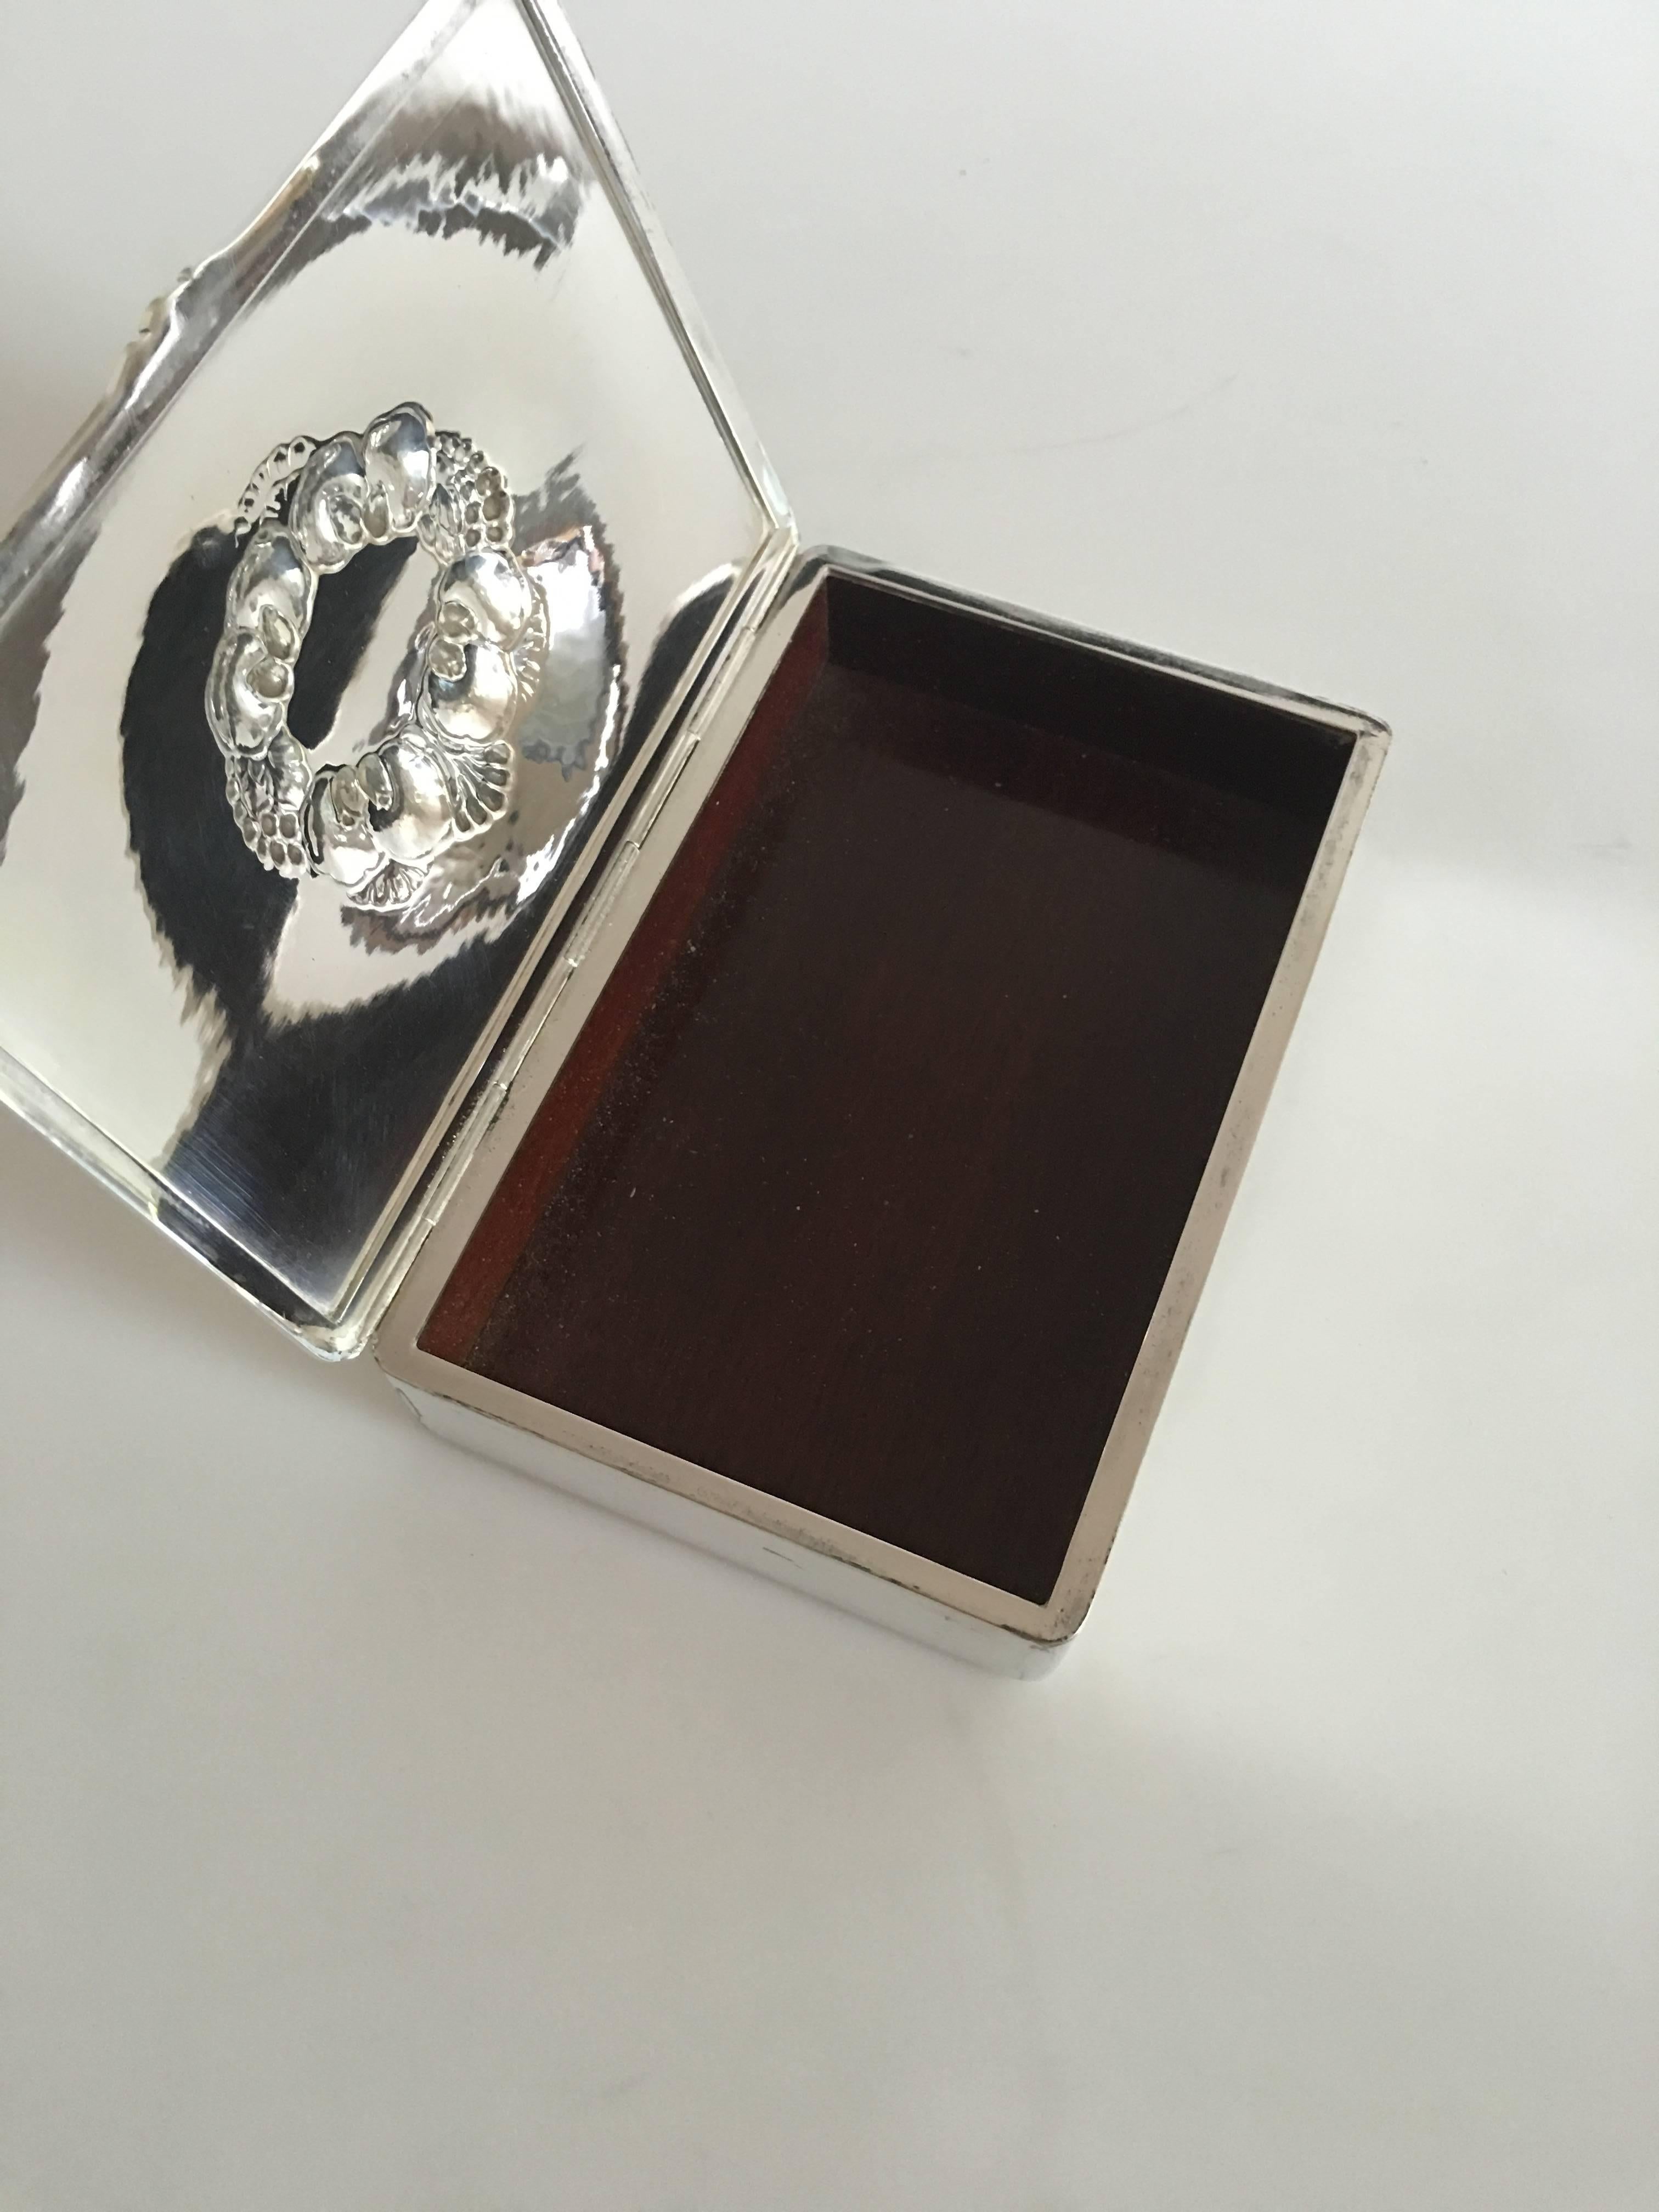 Georg Jensen sterling silver box or cigarette box #507A. 9.5 x 14.5 x 2.7 cm (3 47/64